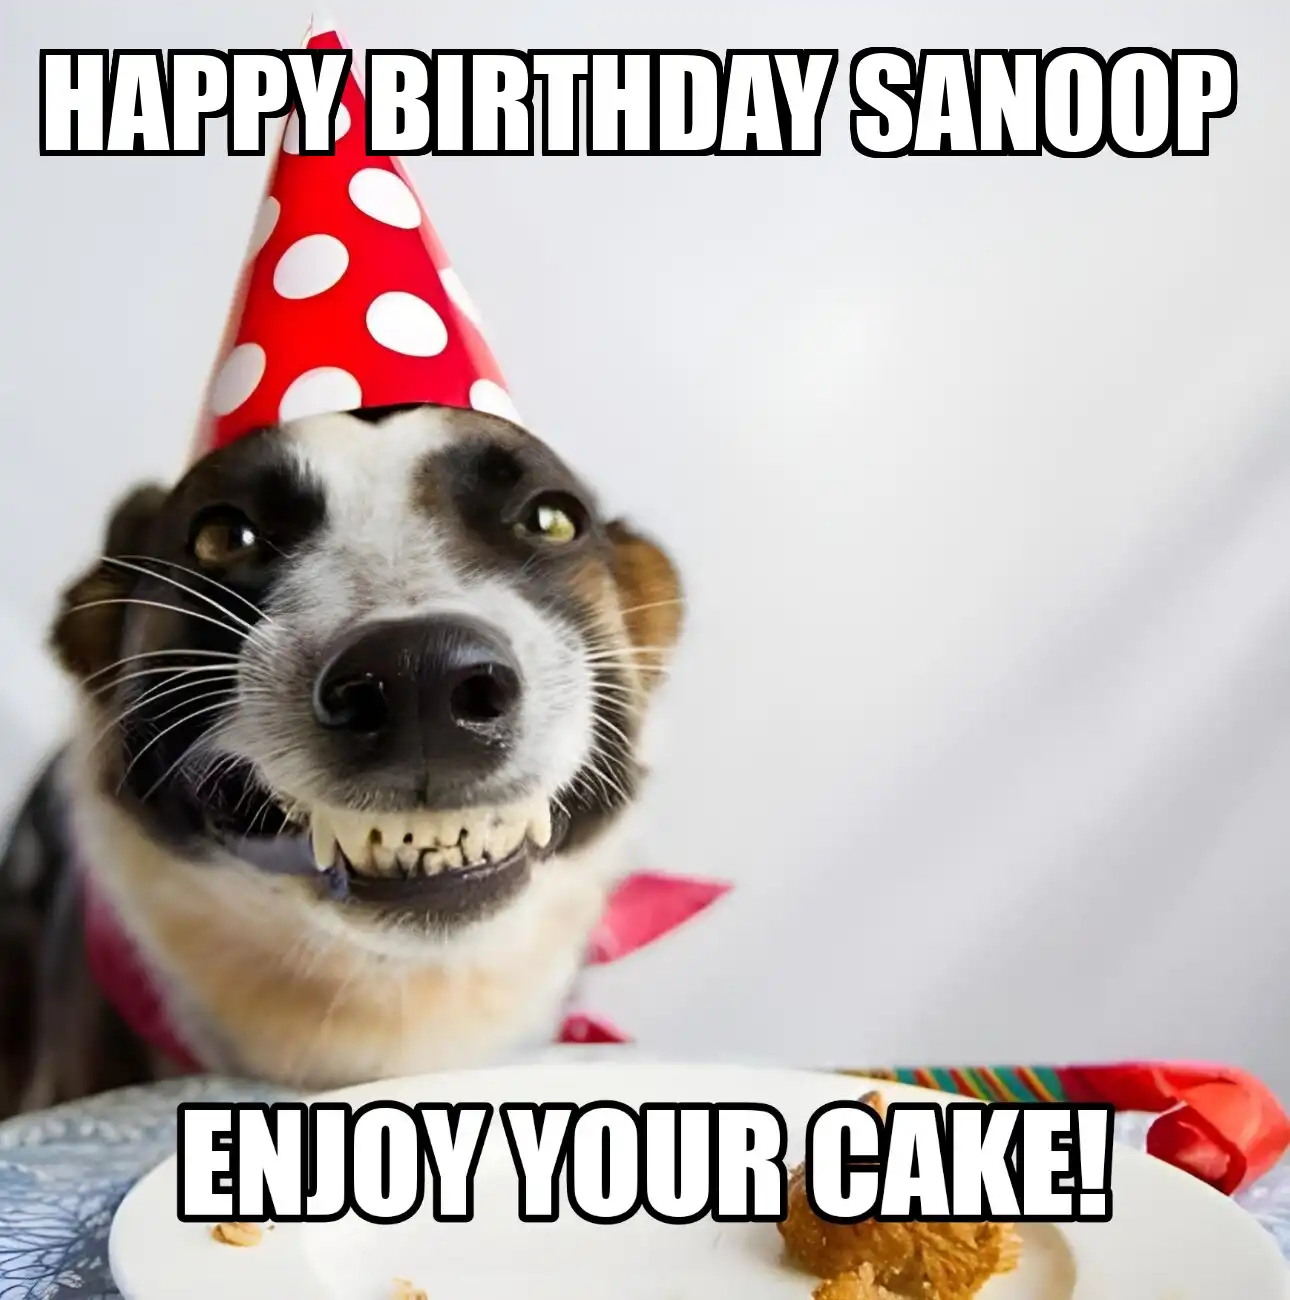 Happy Birthday Sanoop Enjoy Your Cake Dog Meme